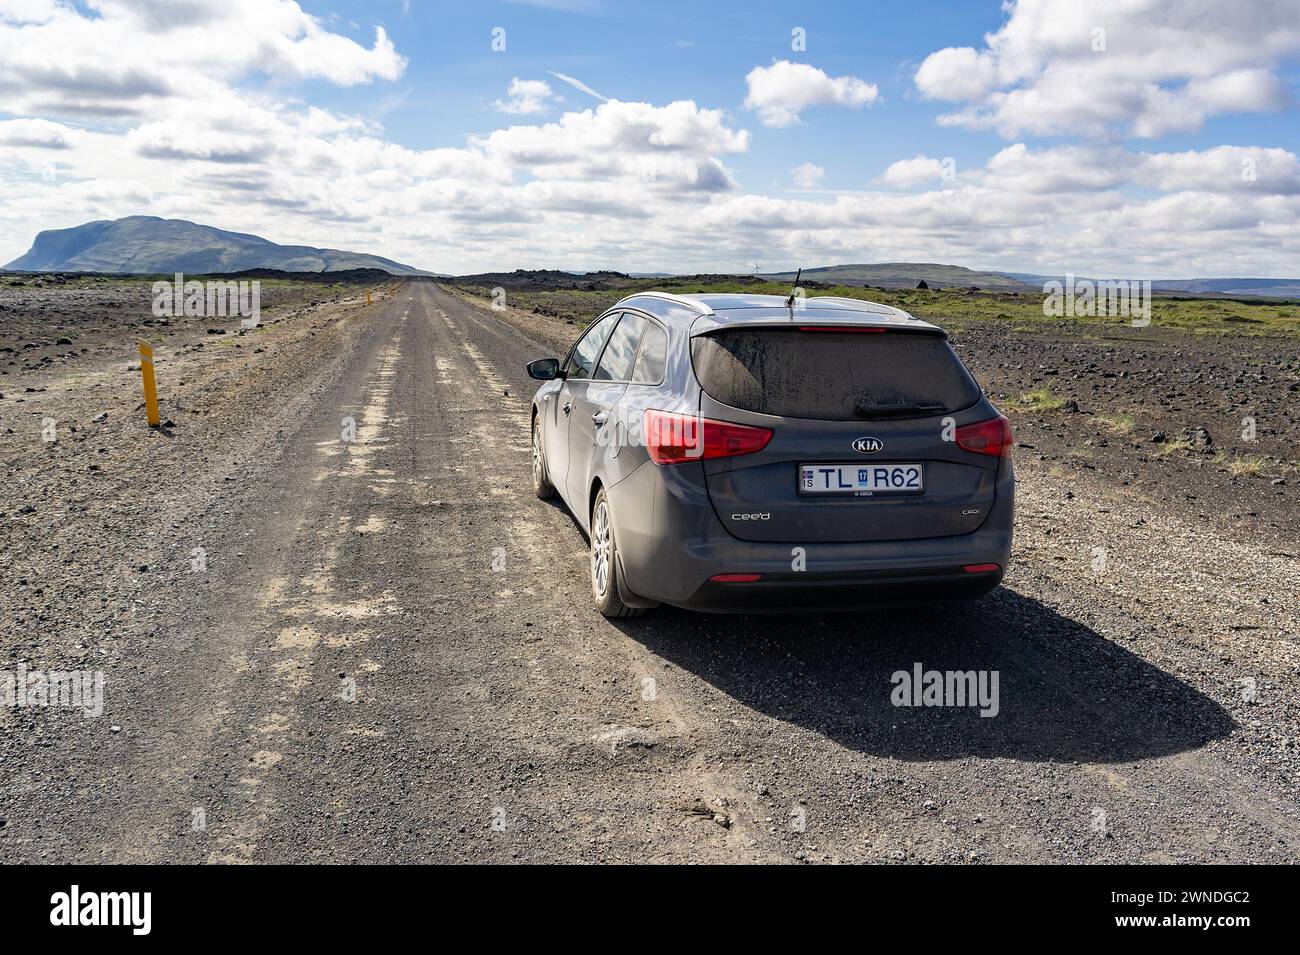 ICELAND - JUNE 29, 2014: Grey Kia Ceed SW car on desert road near volcanoes in Iceland Stock Photo